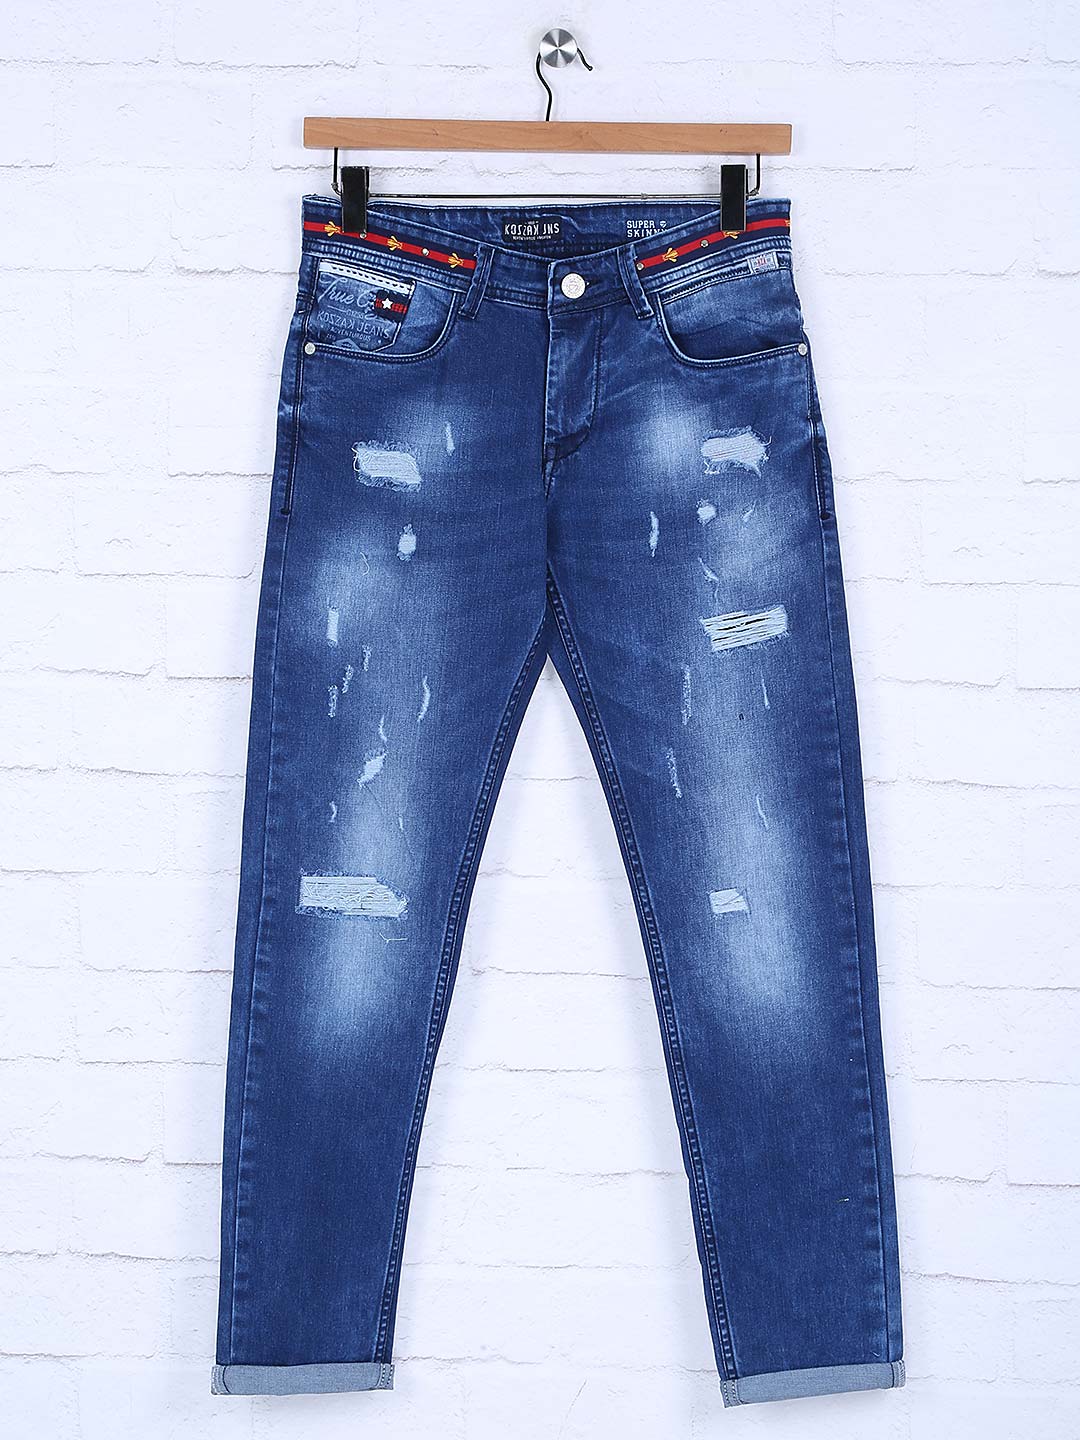 kozzak jeans price